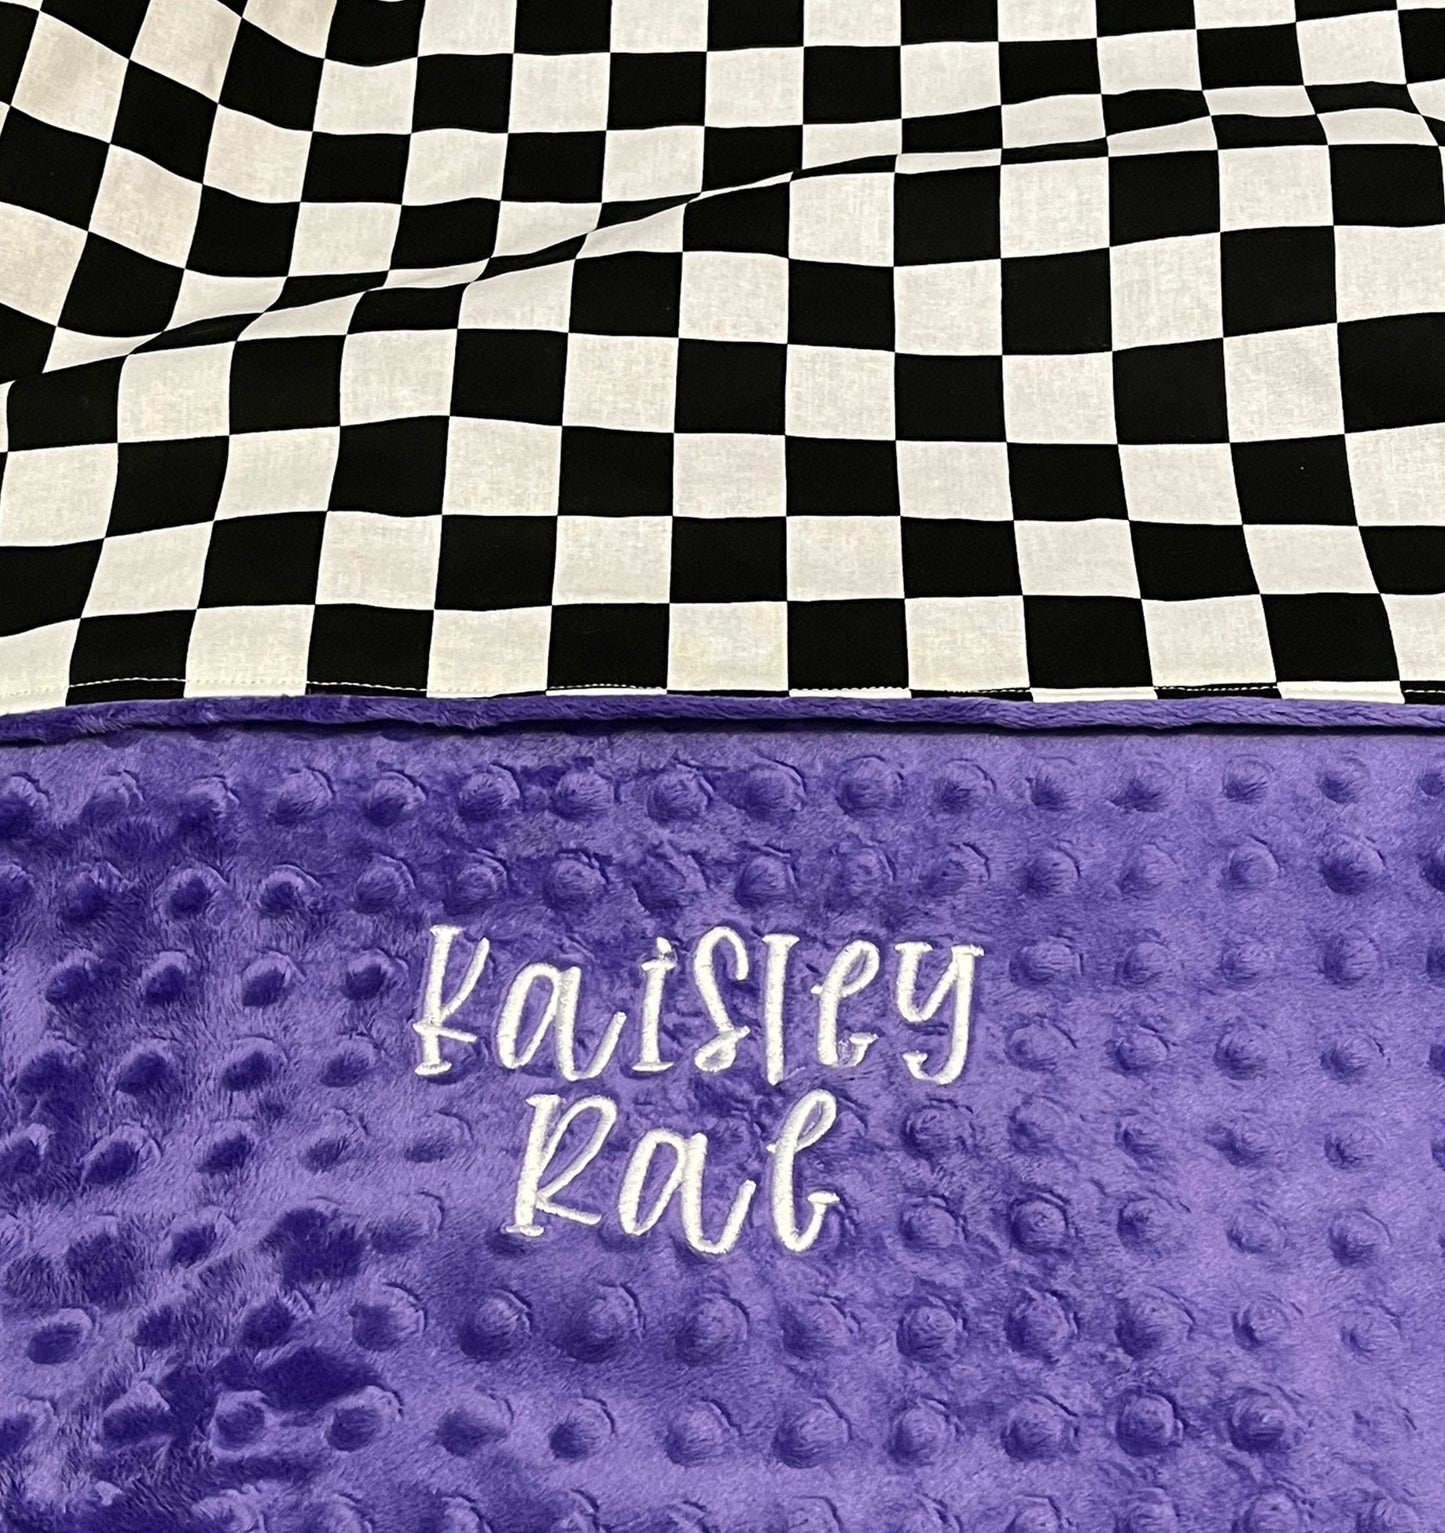 racing blanket with purple minky